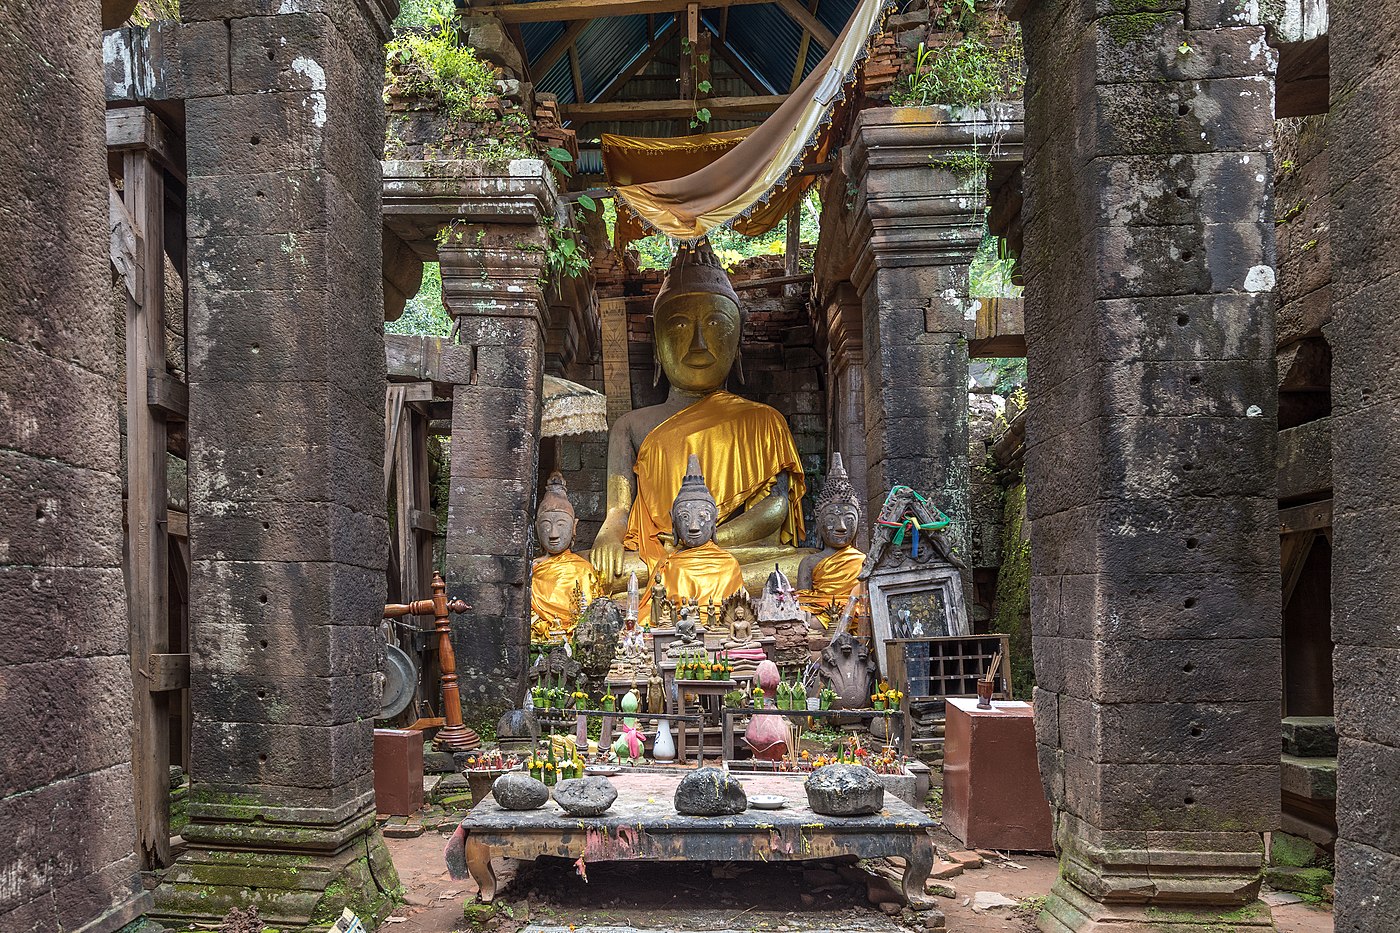 Clothed statues of the Buddha seated Wat Phou Champasak Laos